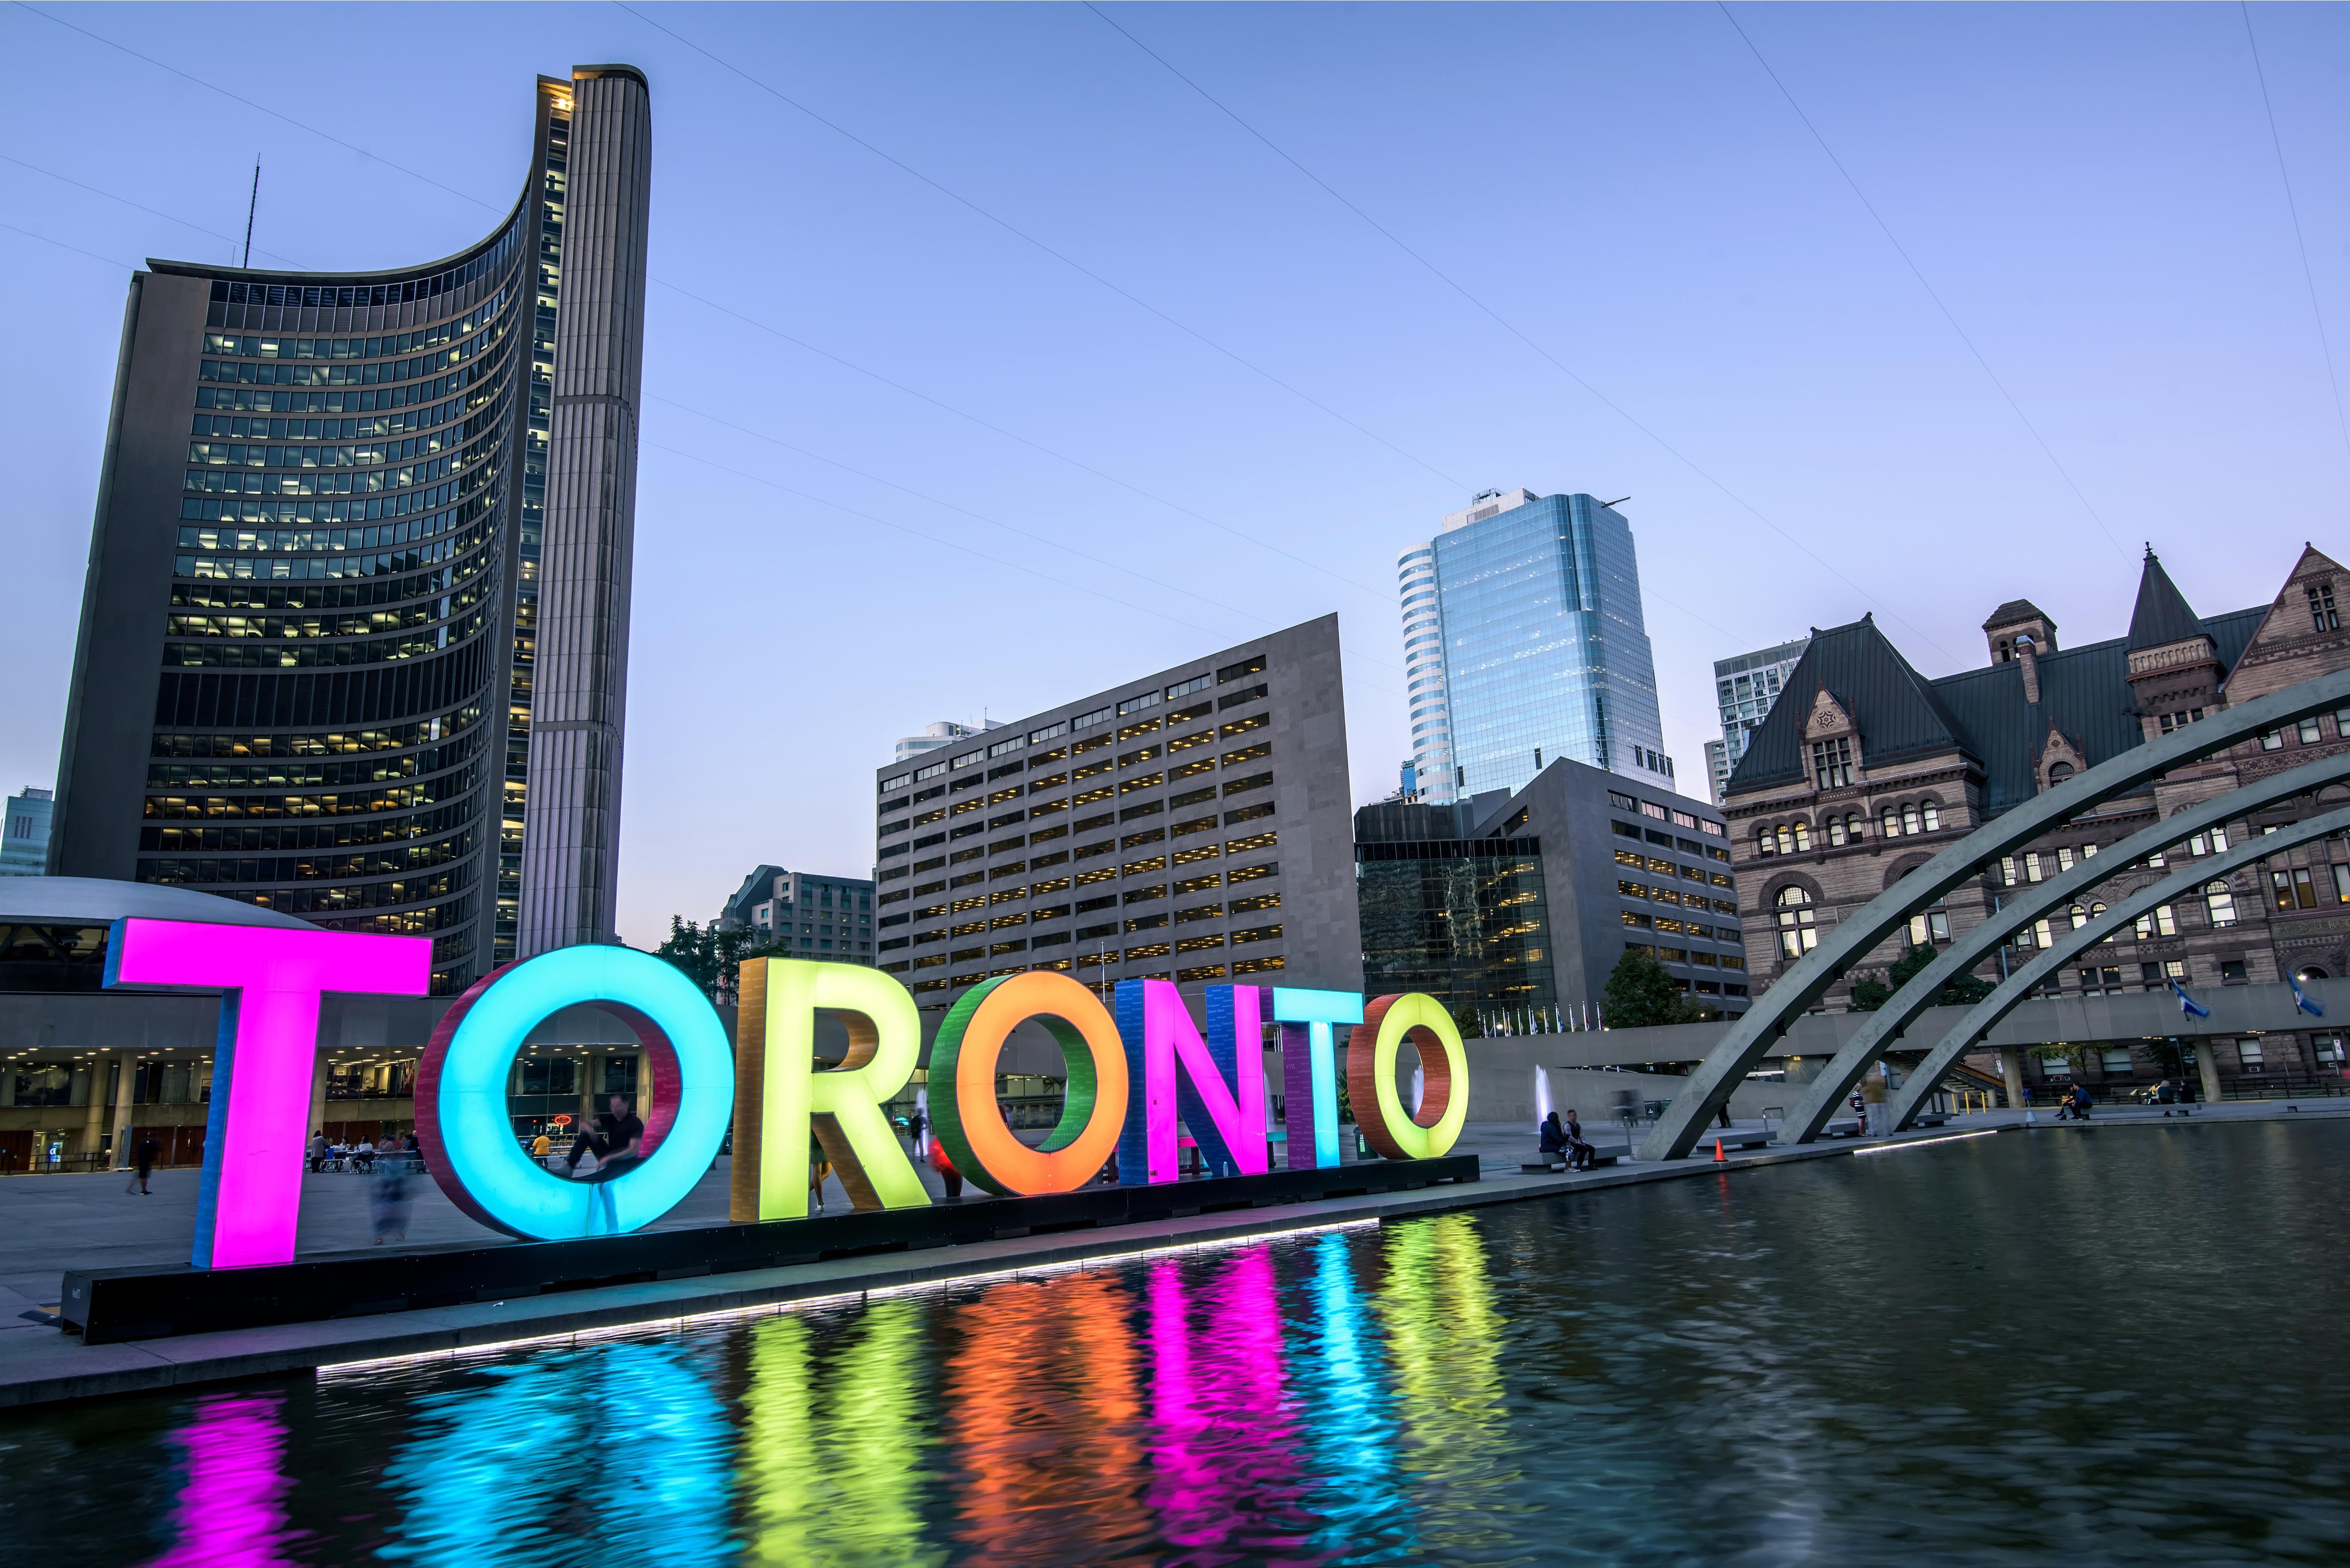 an illuminated TORONTO sign outside Toronto City Hall